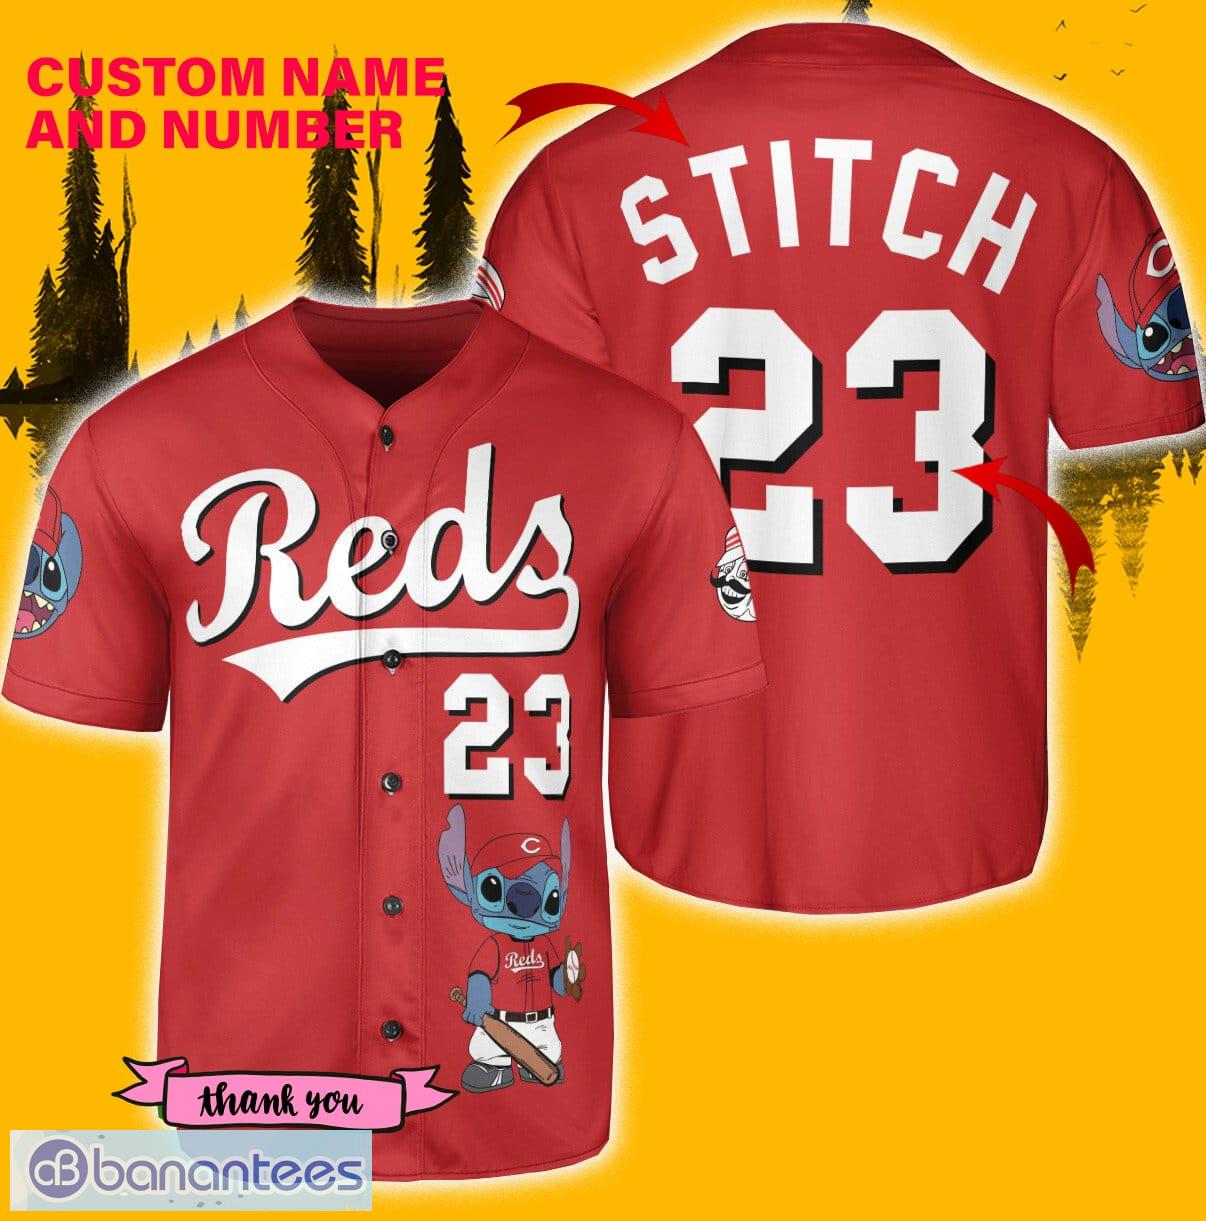 custom reds jersey